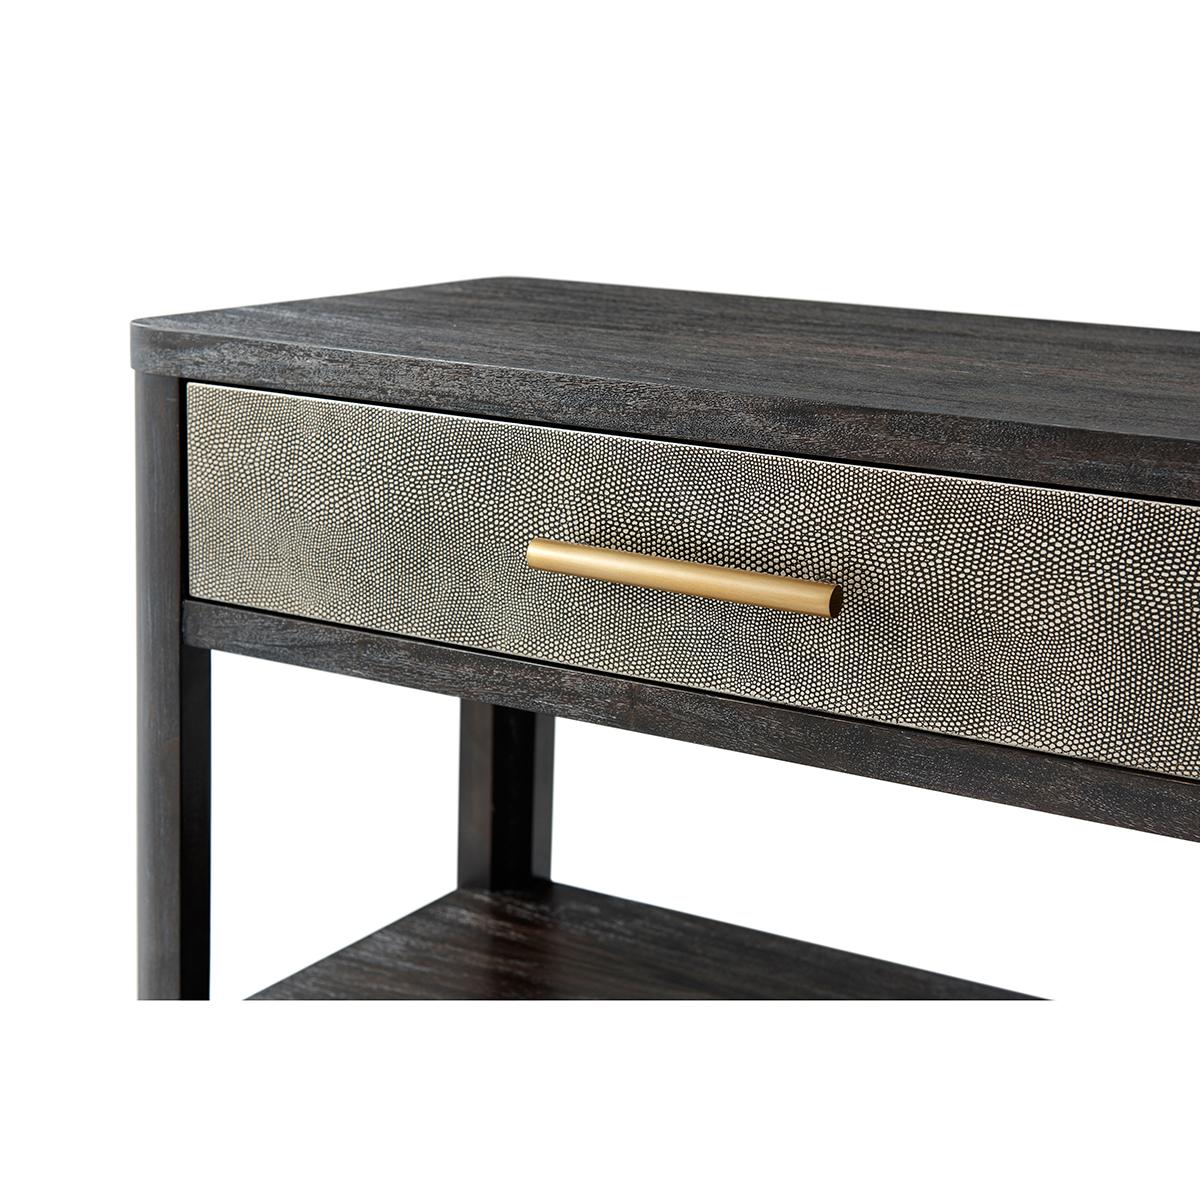 Contemporary Dark Art Deco Style Console Table For Sale